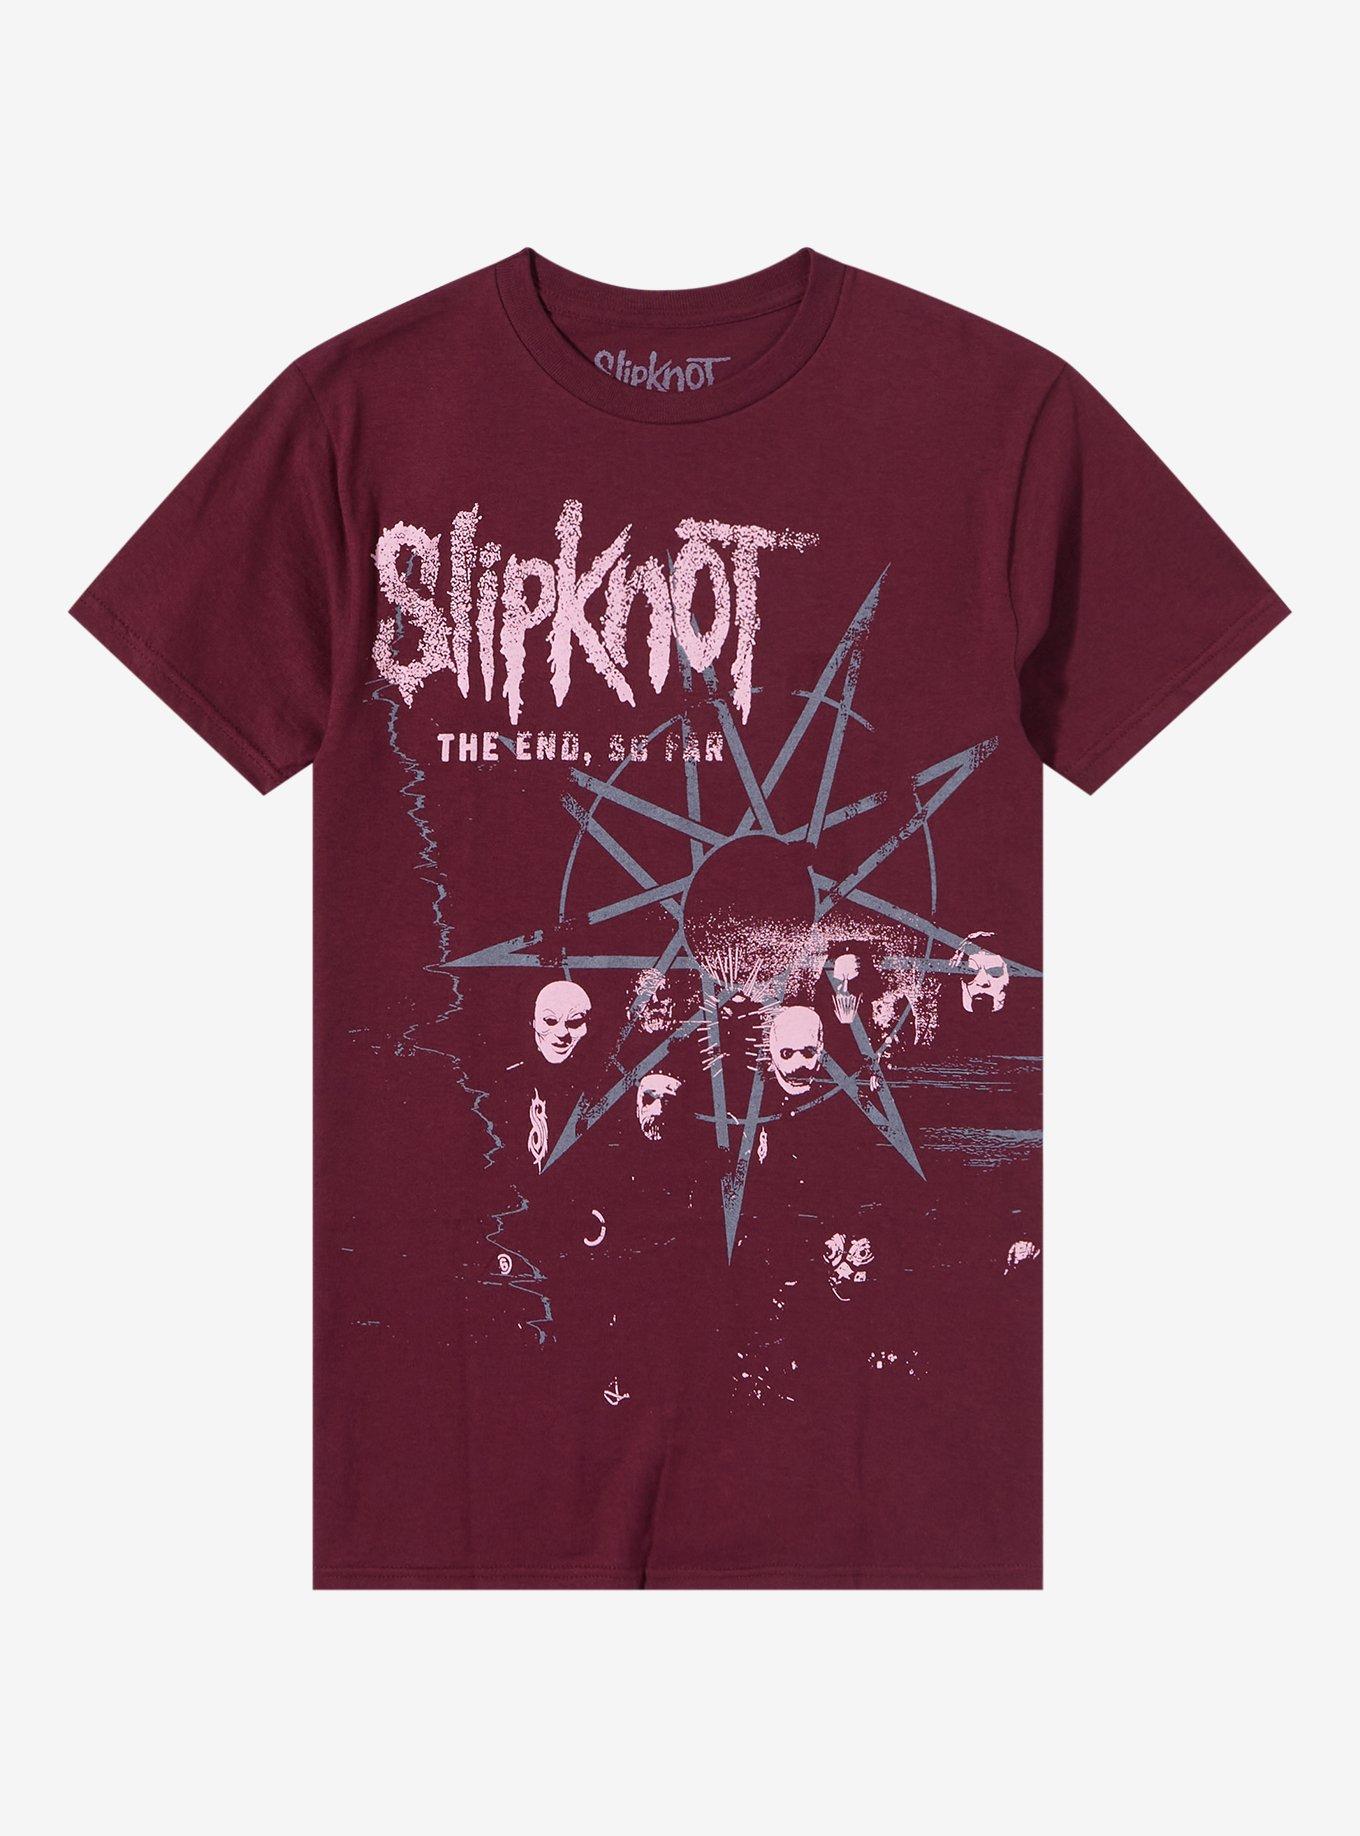 Slipknot The End, So Far Burgundy Boyfriend Fit Girls T-Shirt, BURGUNDY, hi-res